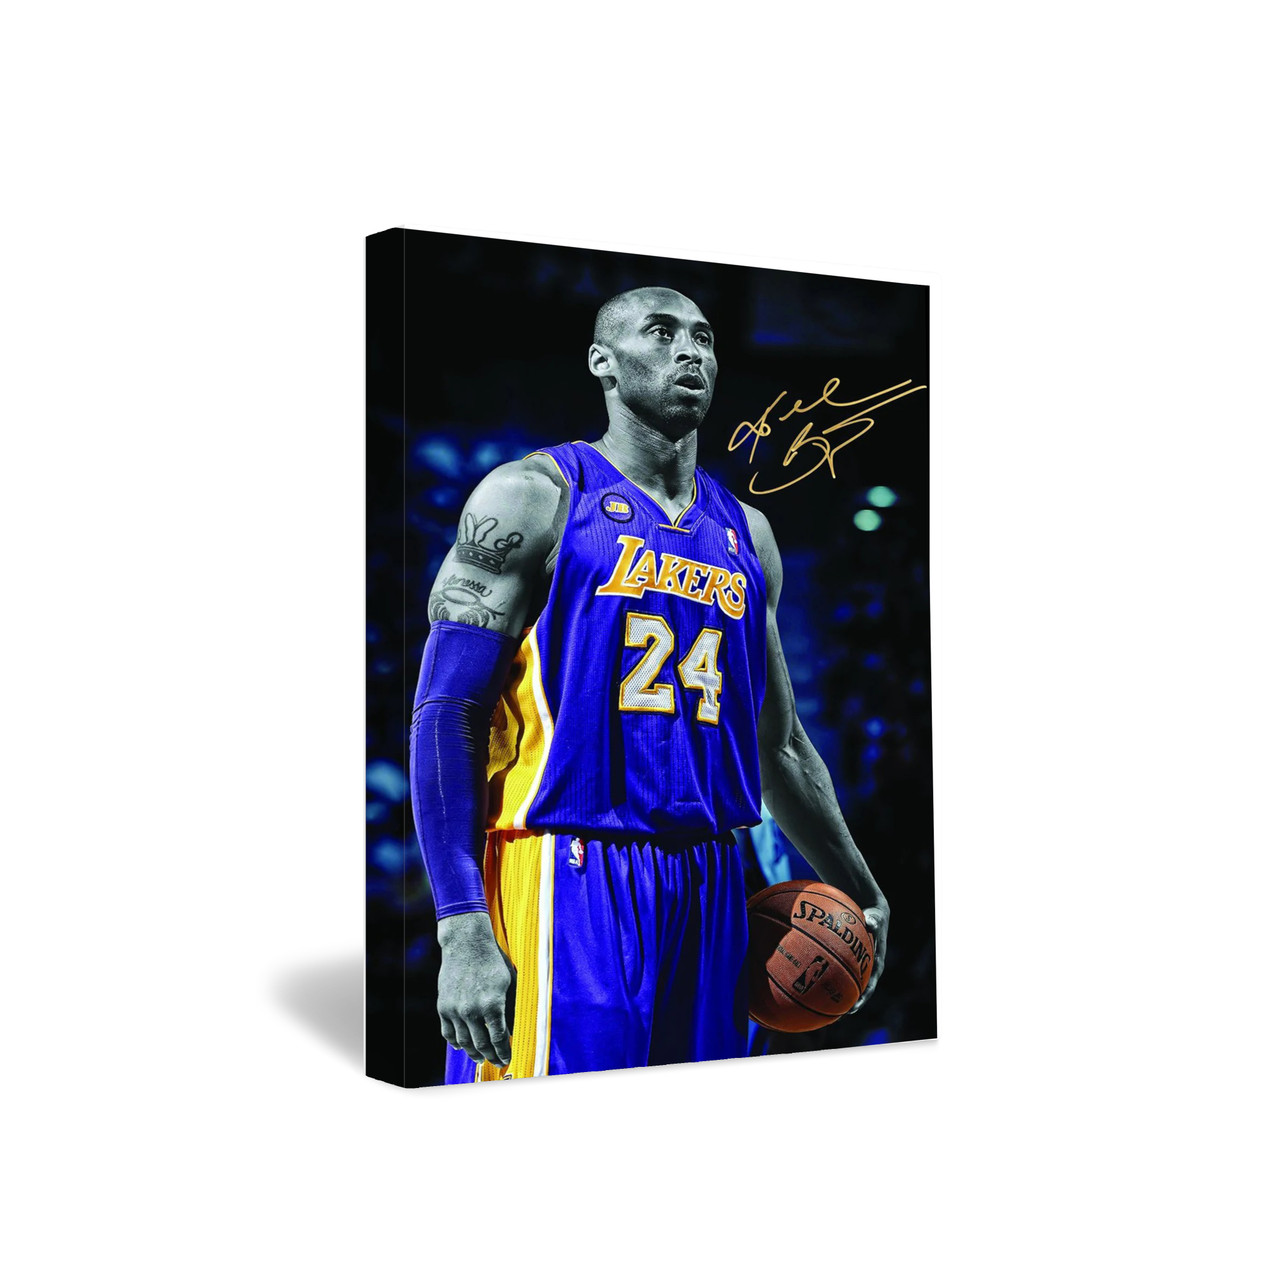 KOBE BRYANT signed poster print photo autograph LA Lakers Los Angeles Nba  Basketball Legend gift L.A.